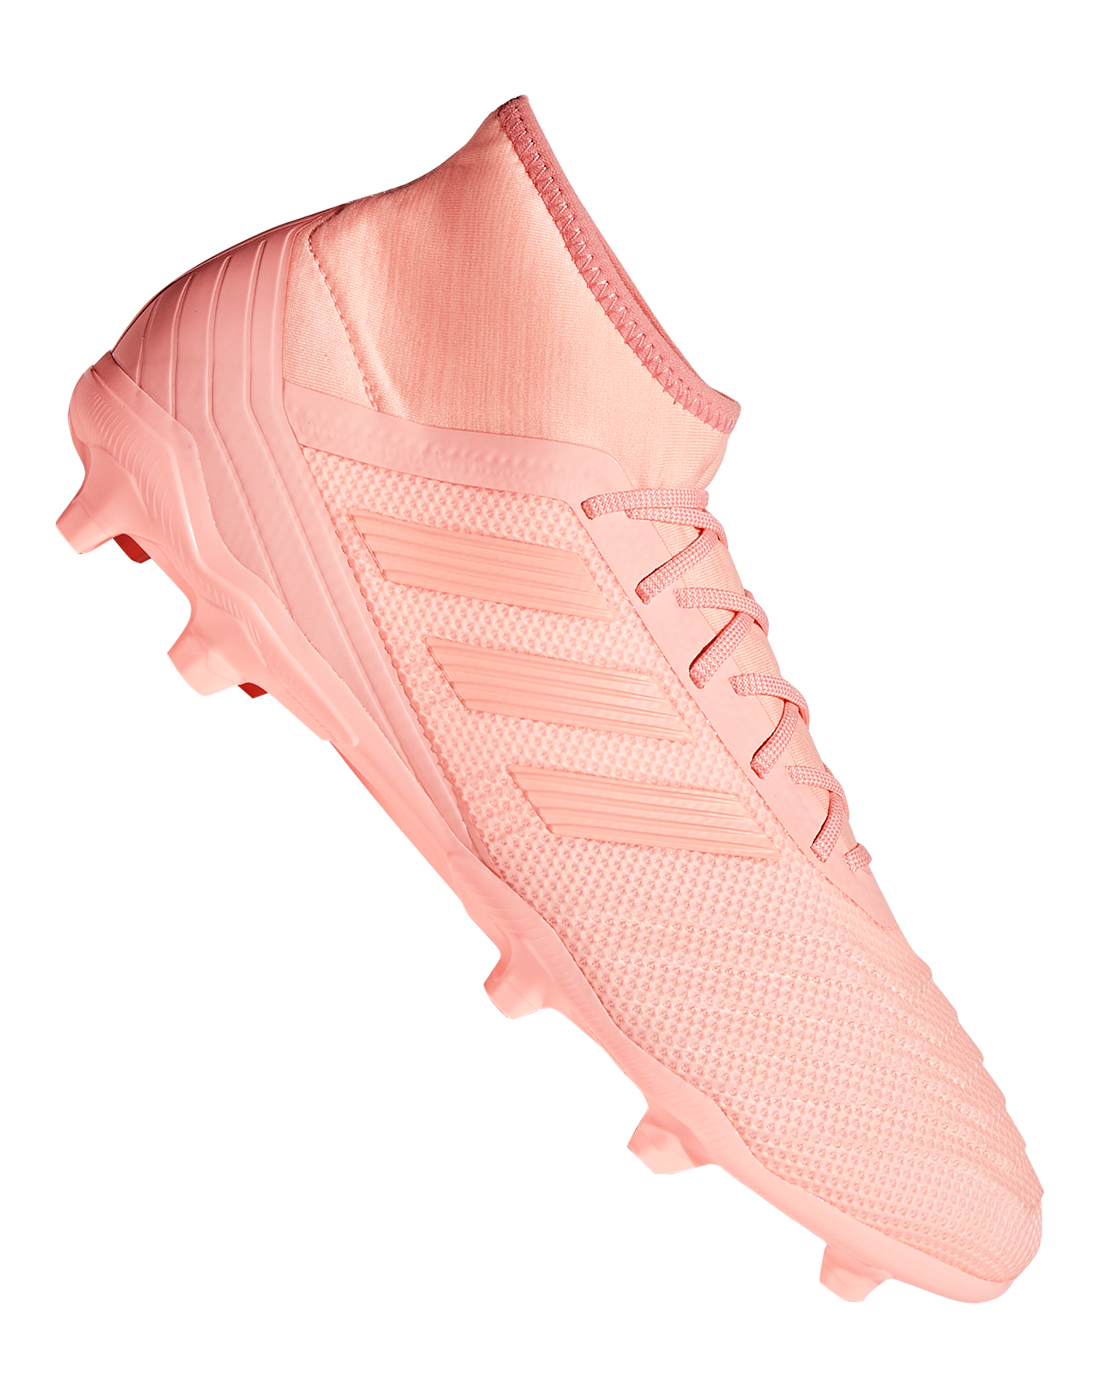 adidas predator pink 18.2